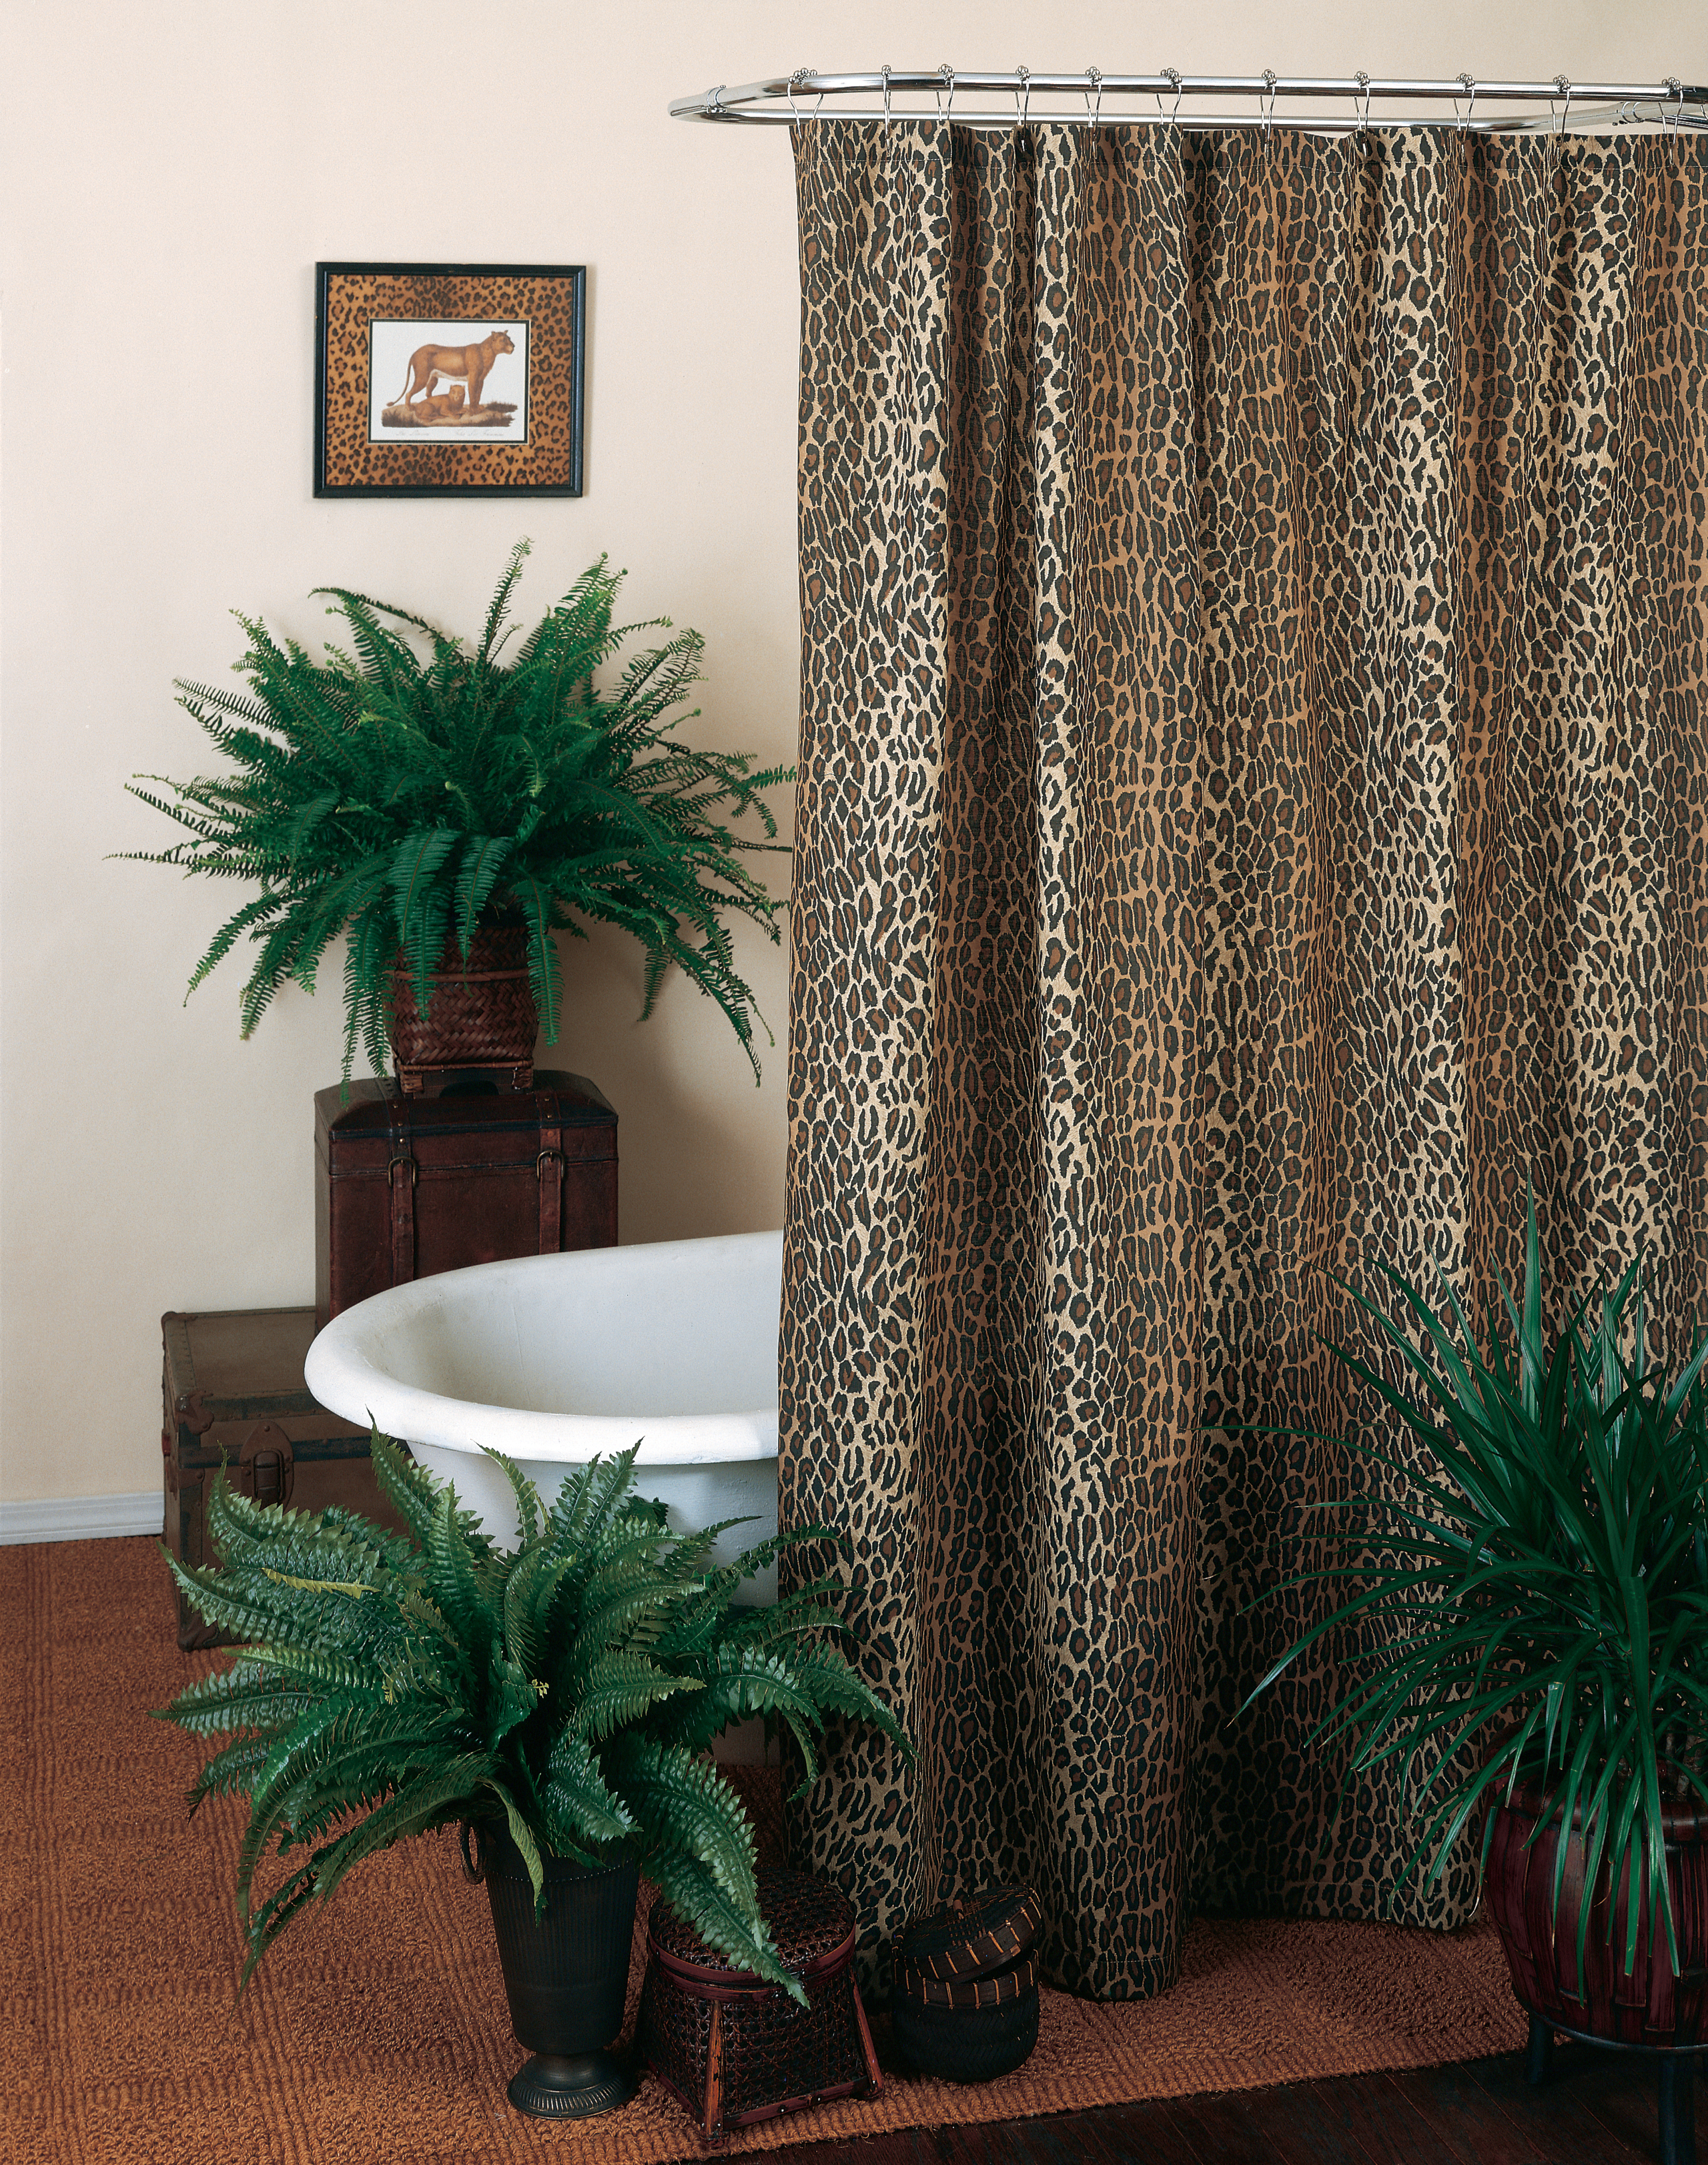 Leopard bathroom decor